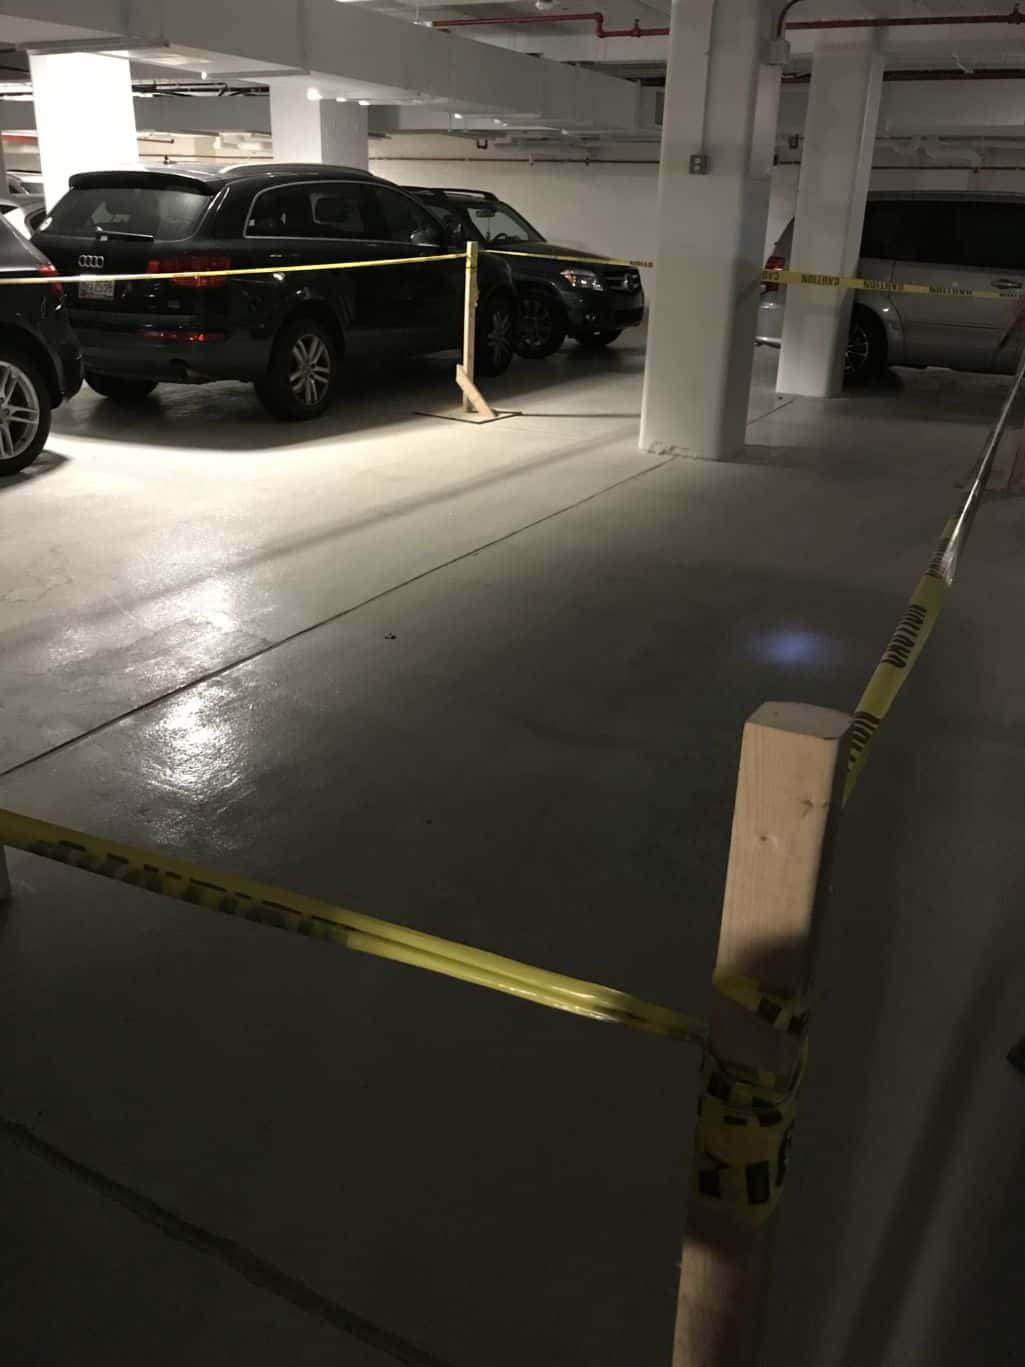 Lafayette Building – Parking Garage Repairs